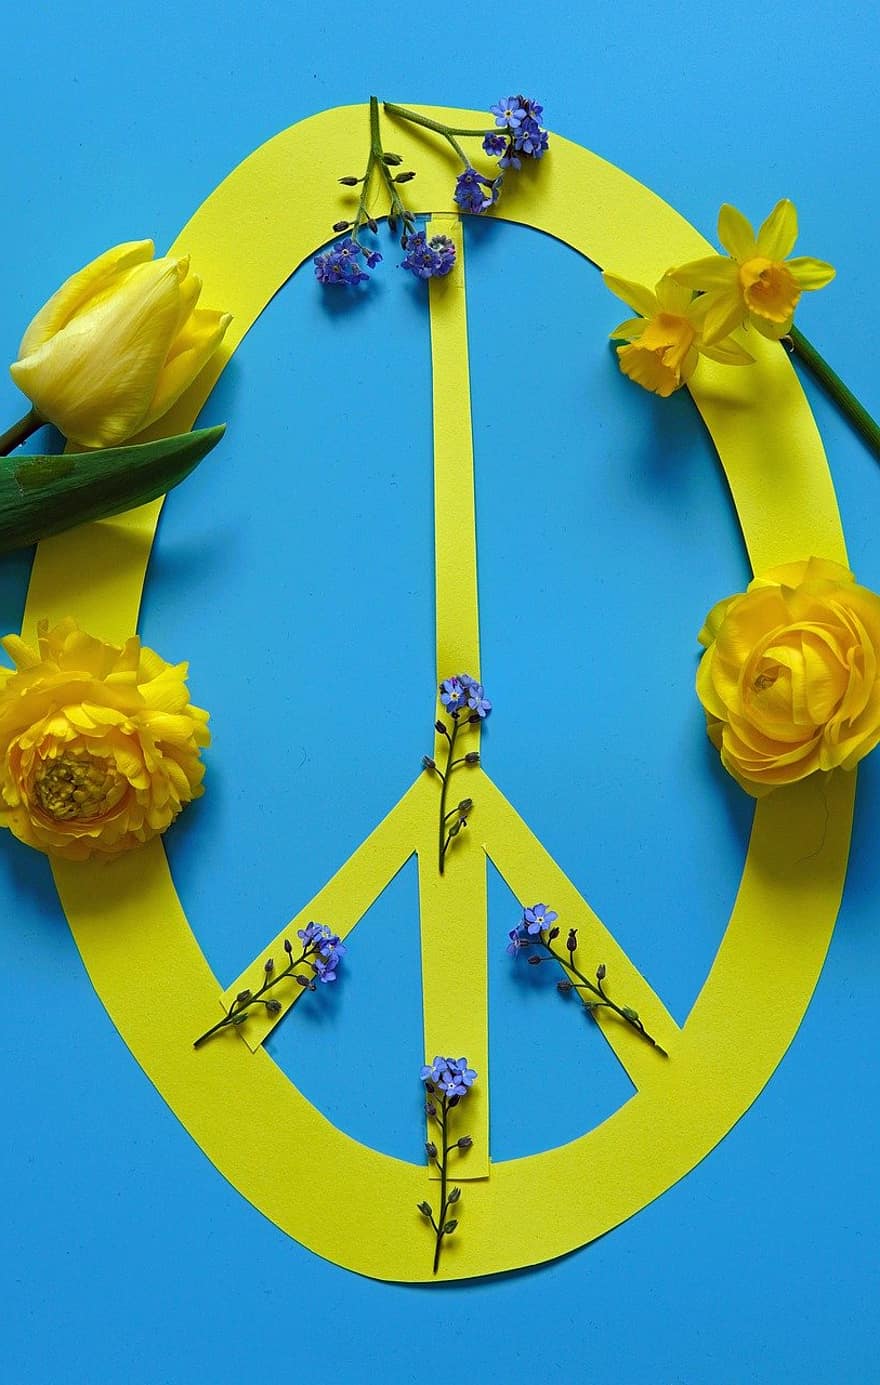 paz, Signo de la paz, contra la guerra, Ucrania, amarillo azul, Colores de Ucrania, símbolo, Semana Santa 2022, Primavera 2022, flor, flores